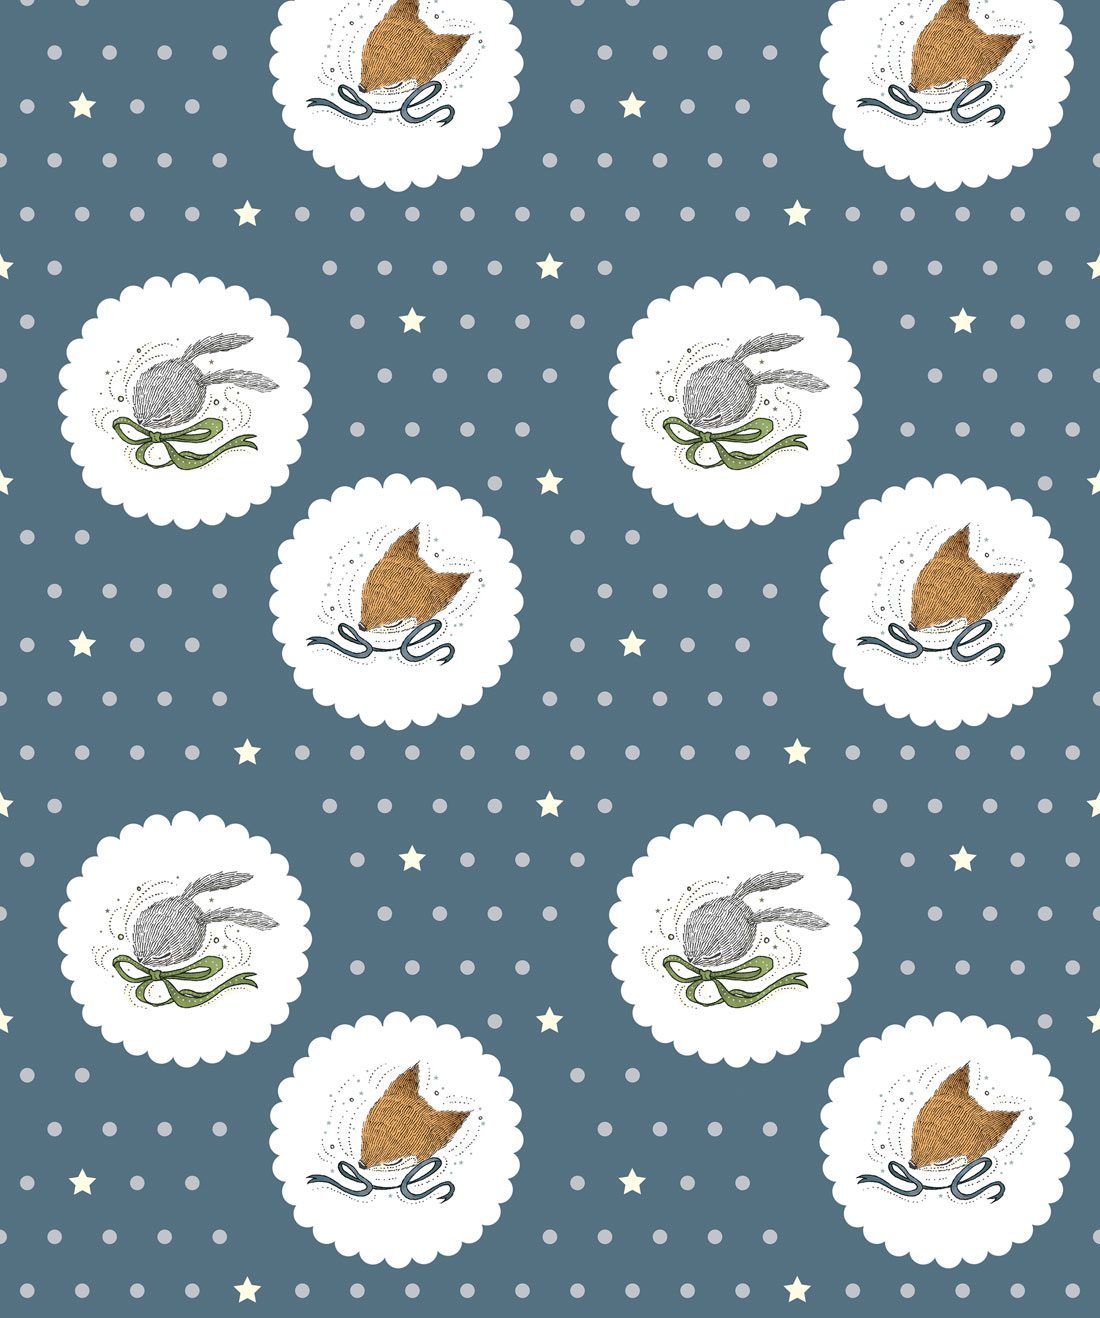 Fox & Rabbit is a cute animal kid Wallpaper